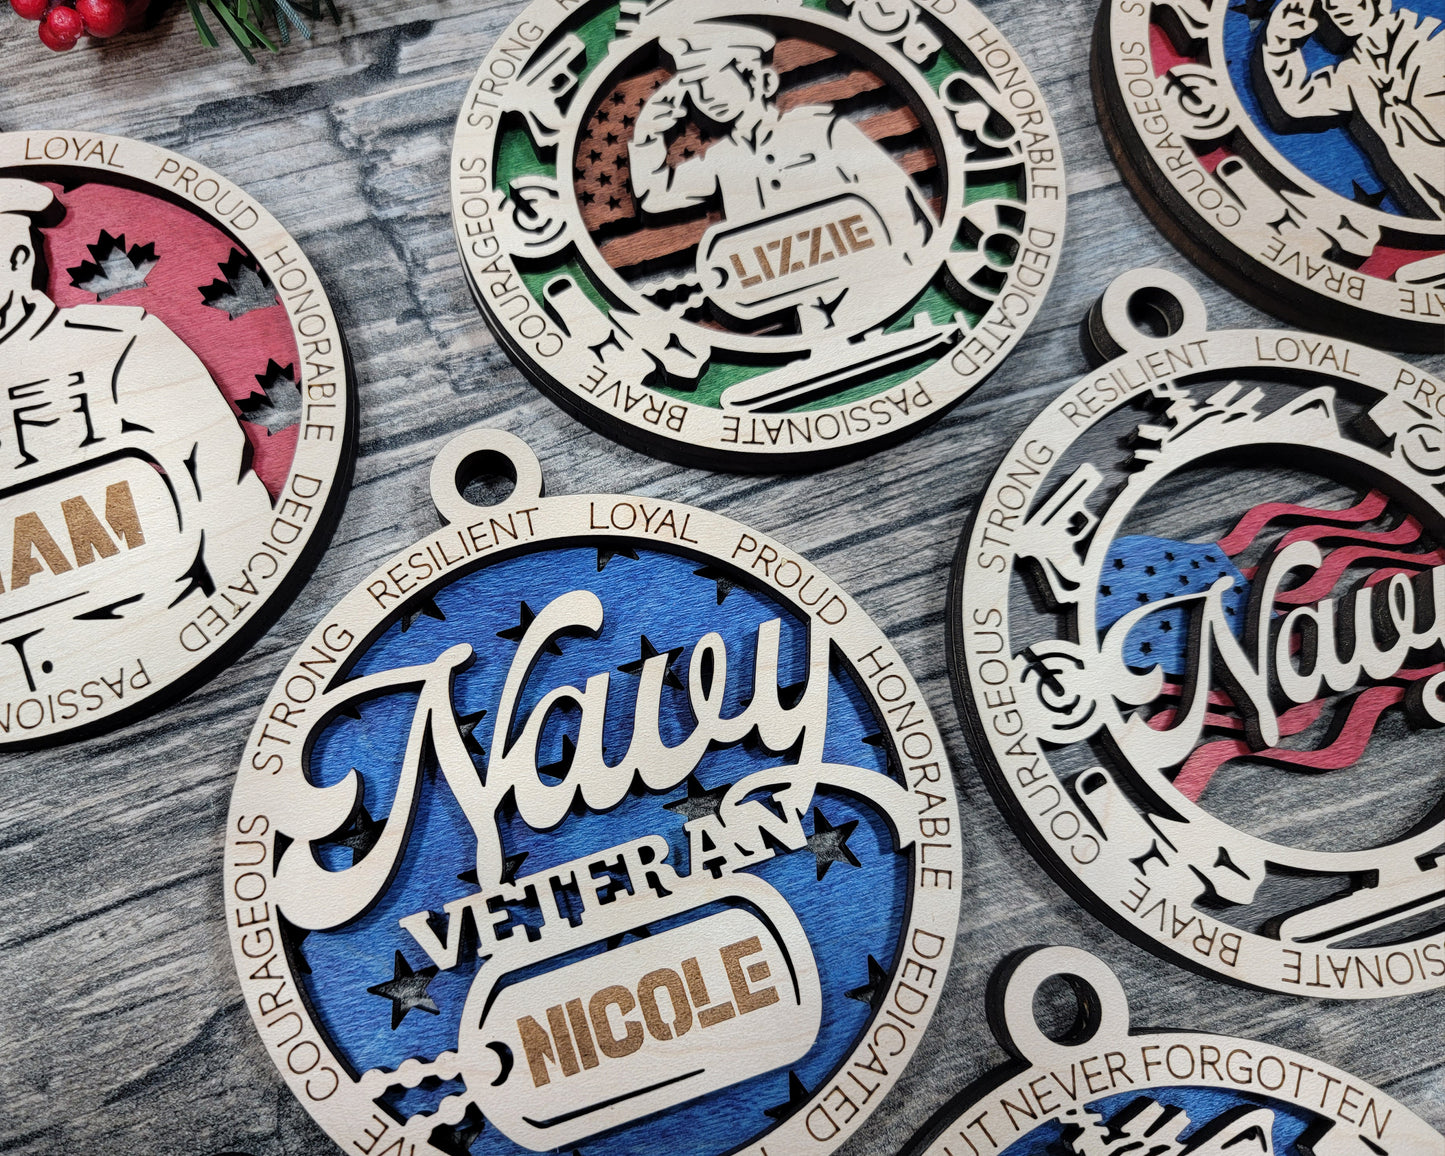 Customizable Navy/Military Ornament